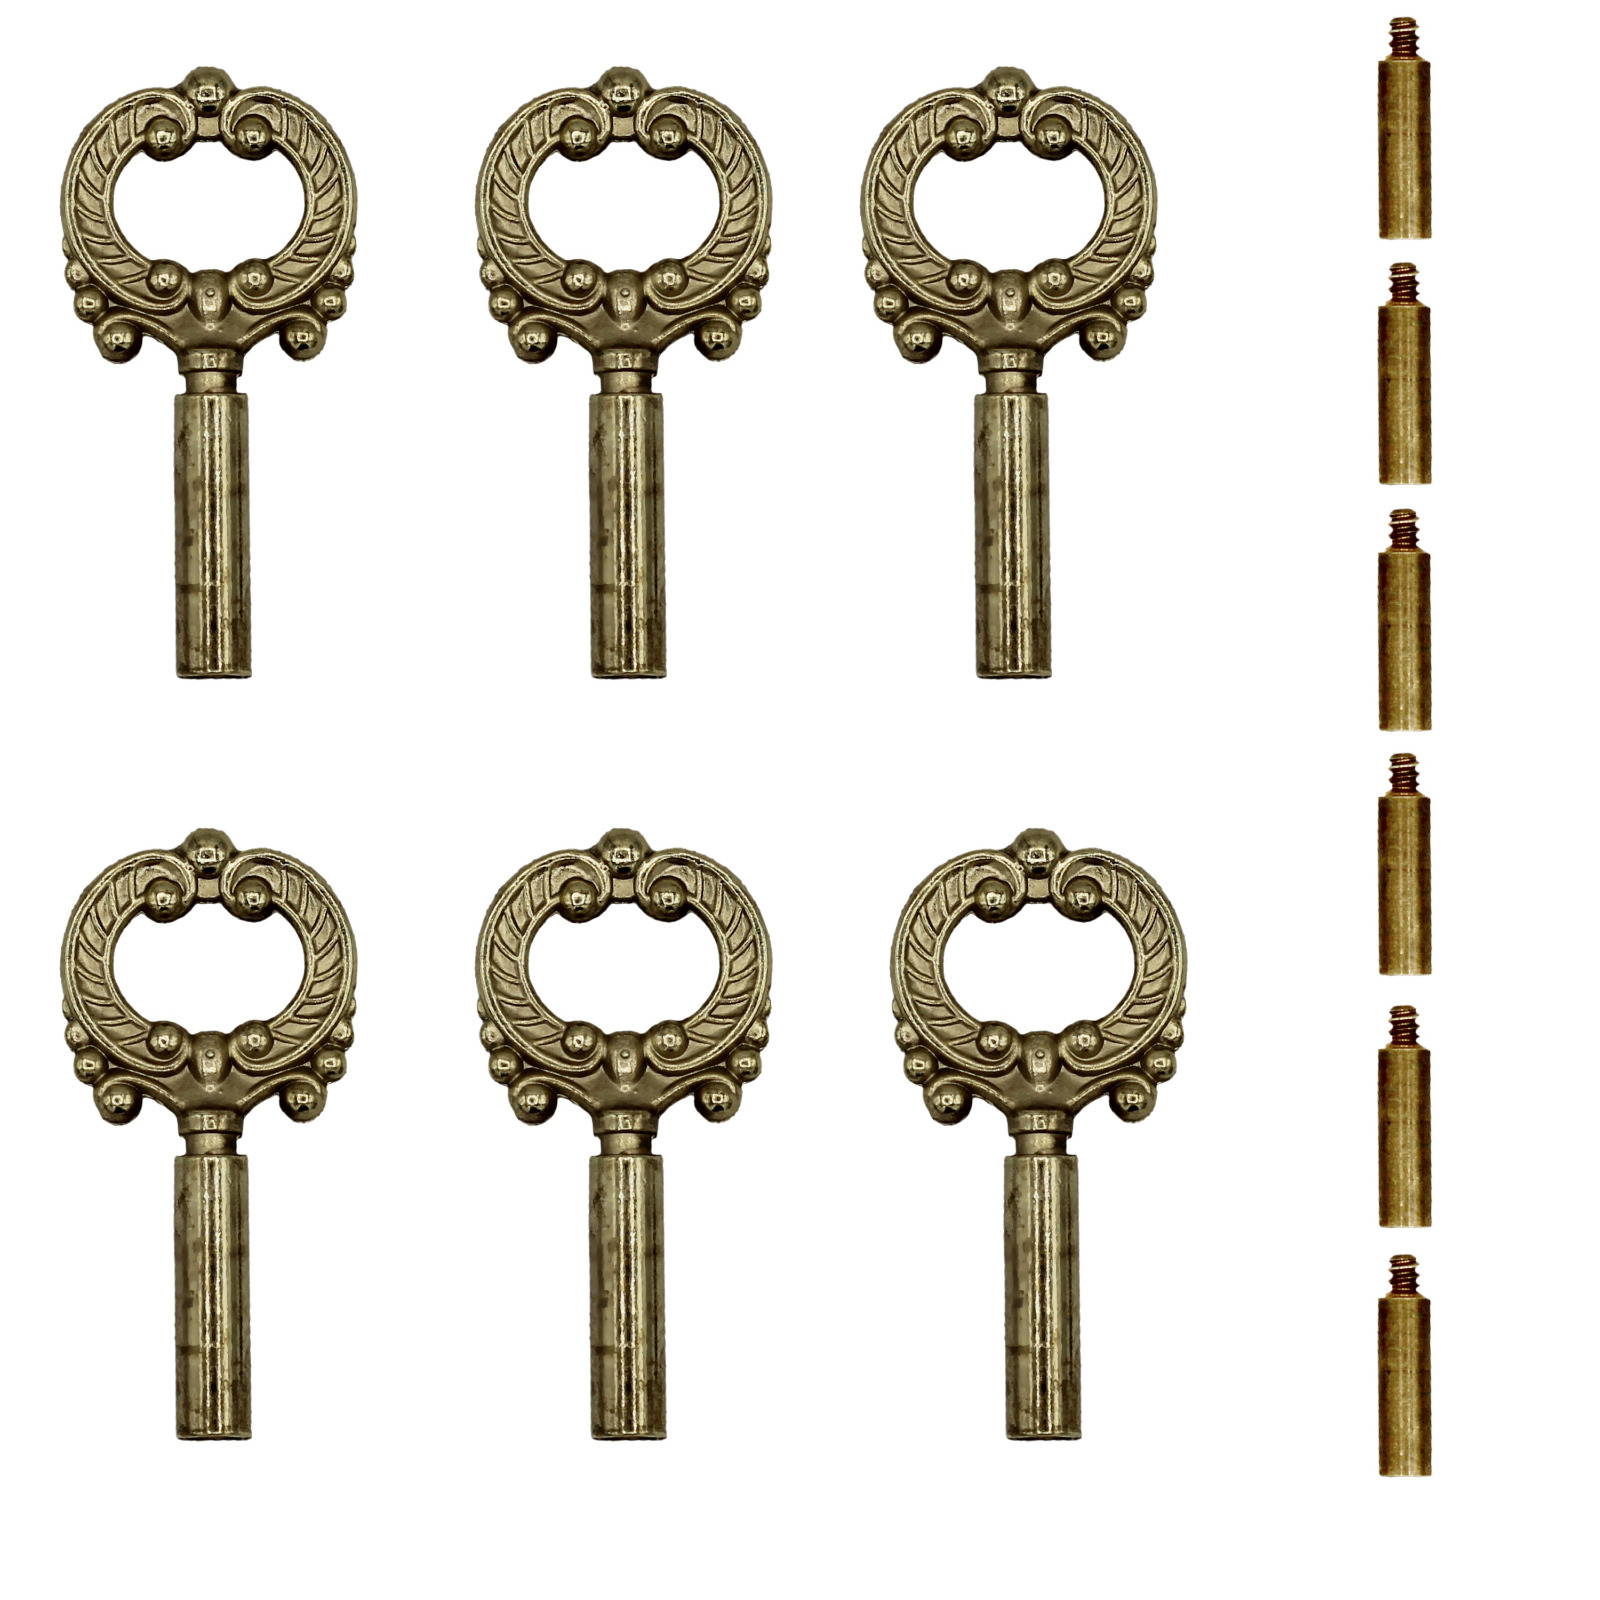  Creative Hobbies Brass Finish Metal Socket Key Turn Knob with 1/2 Brass Extende